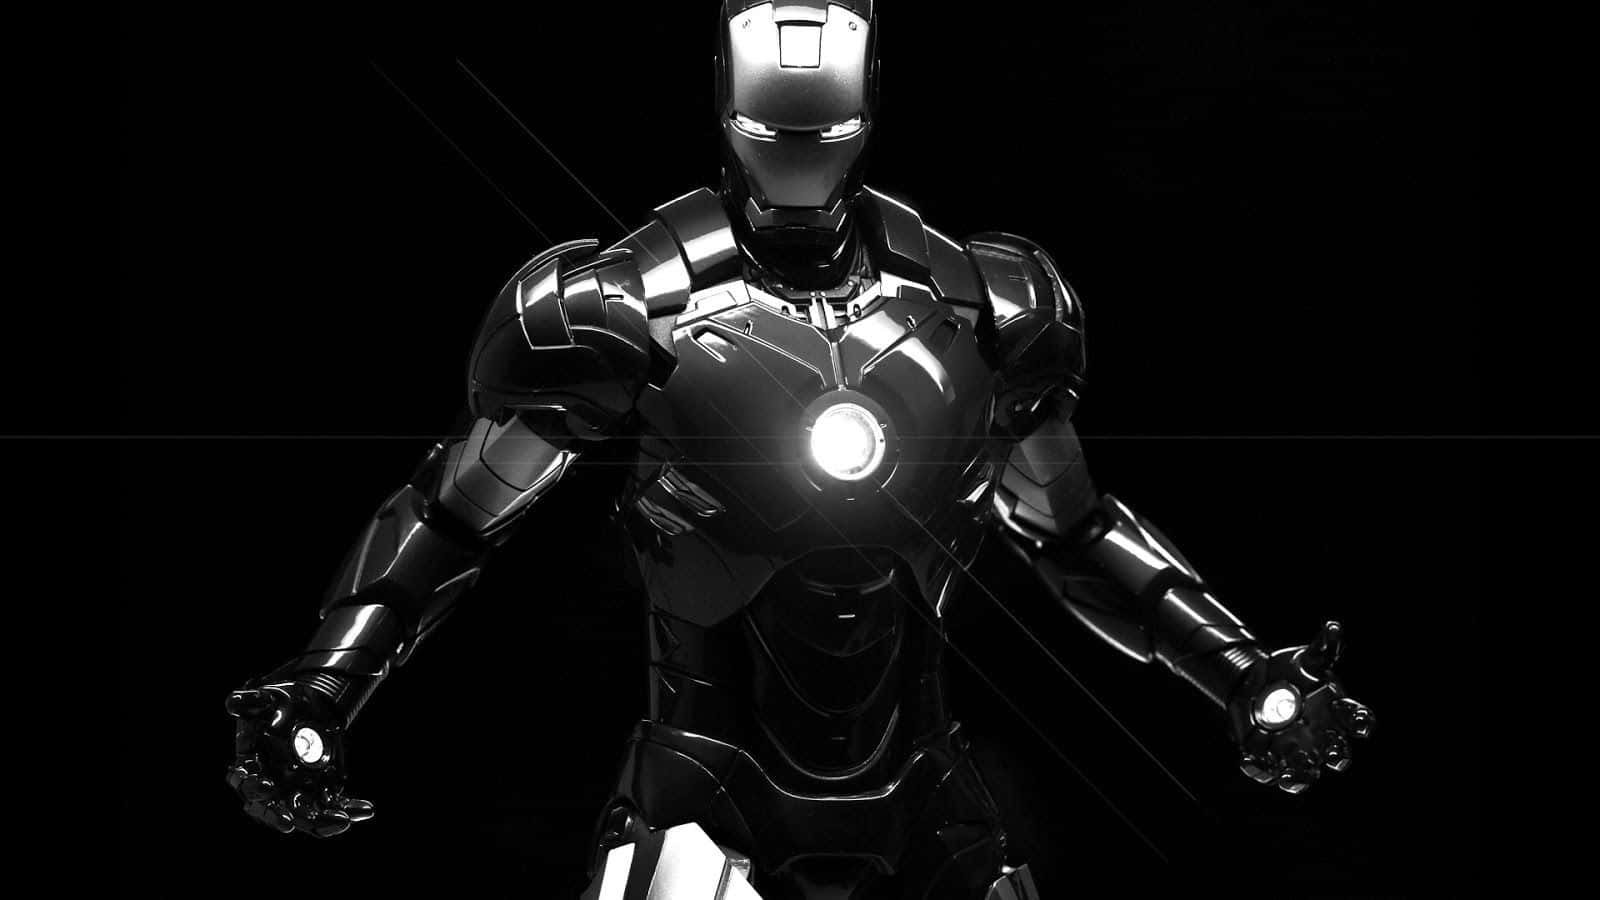 Iron Man Black And White Wallpaper